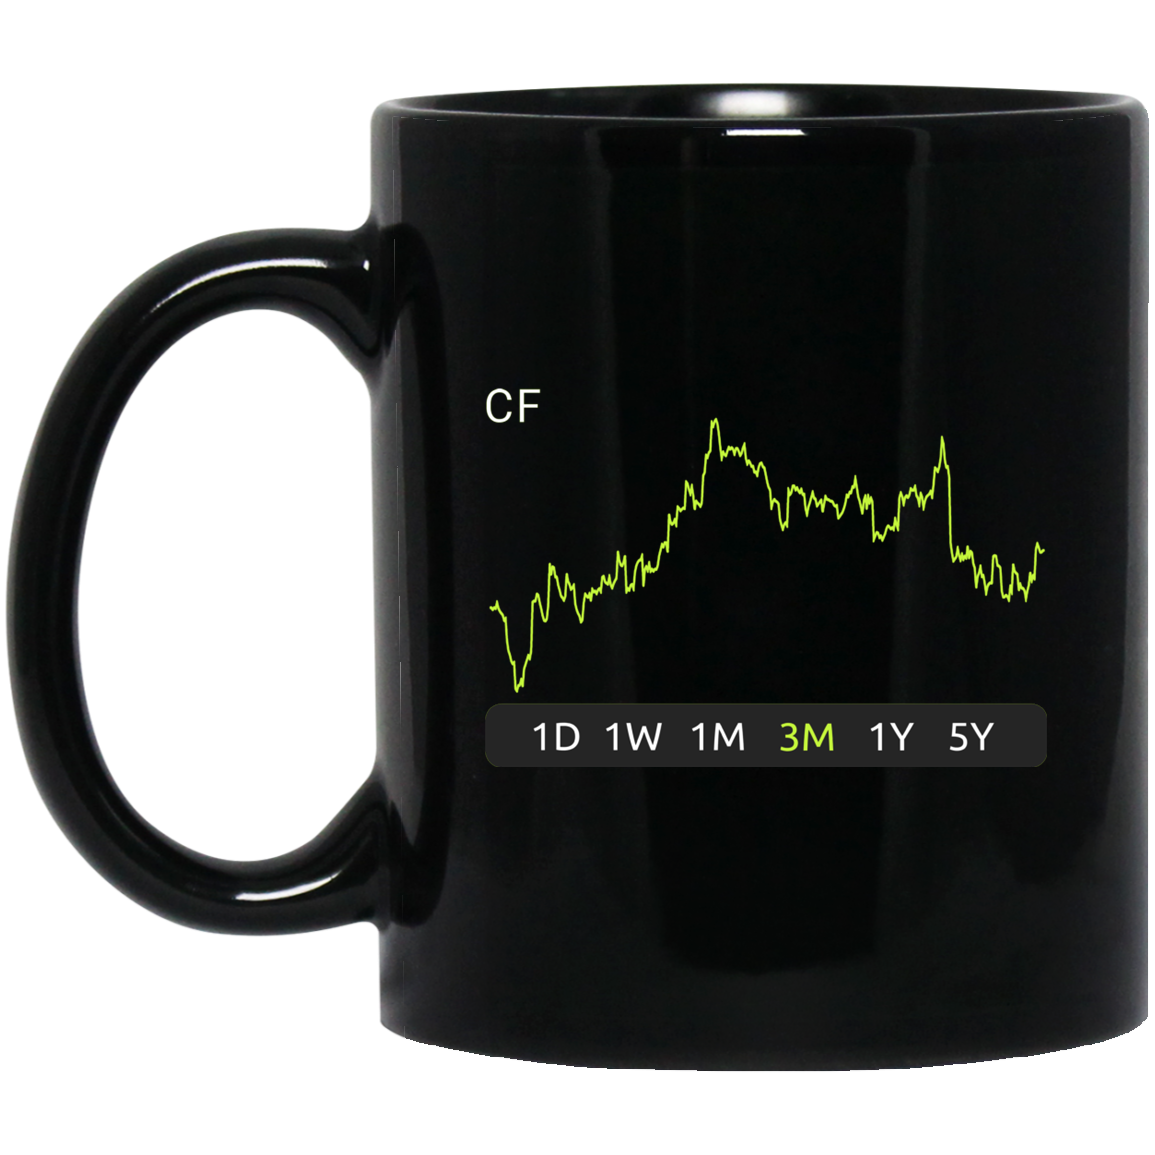 CF Stock 3m Mug